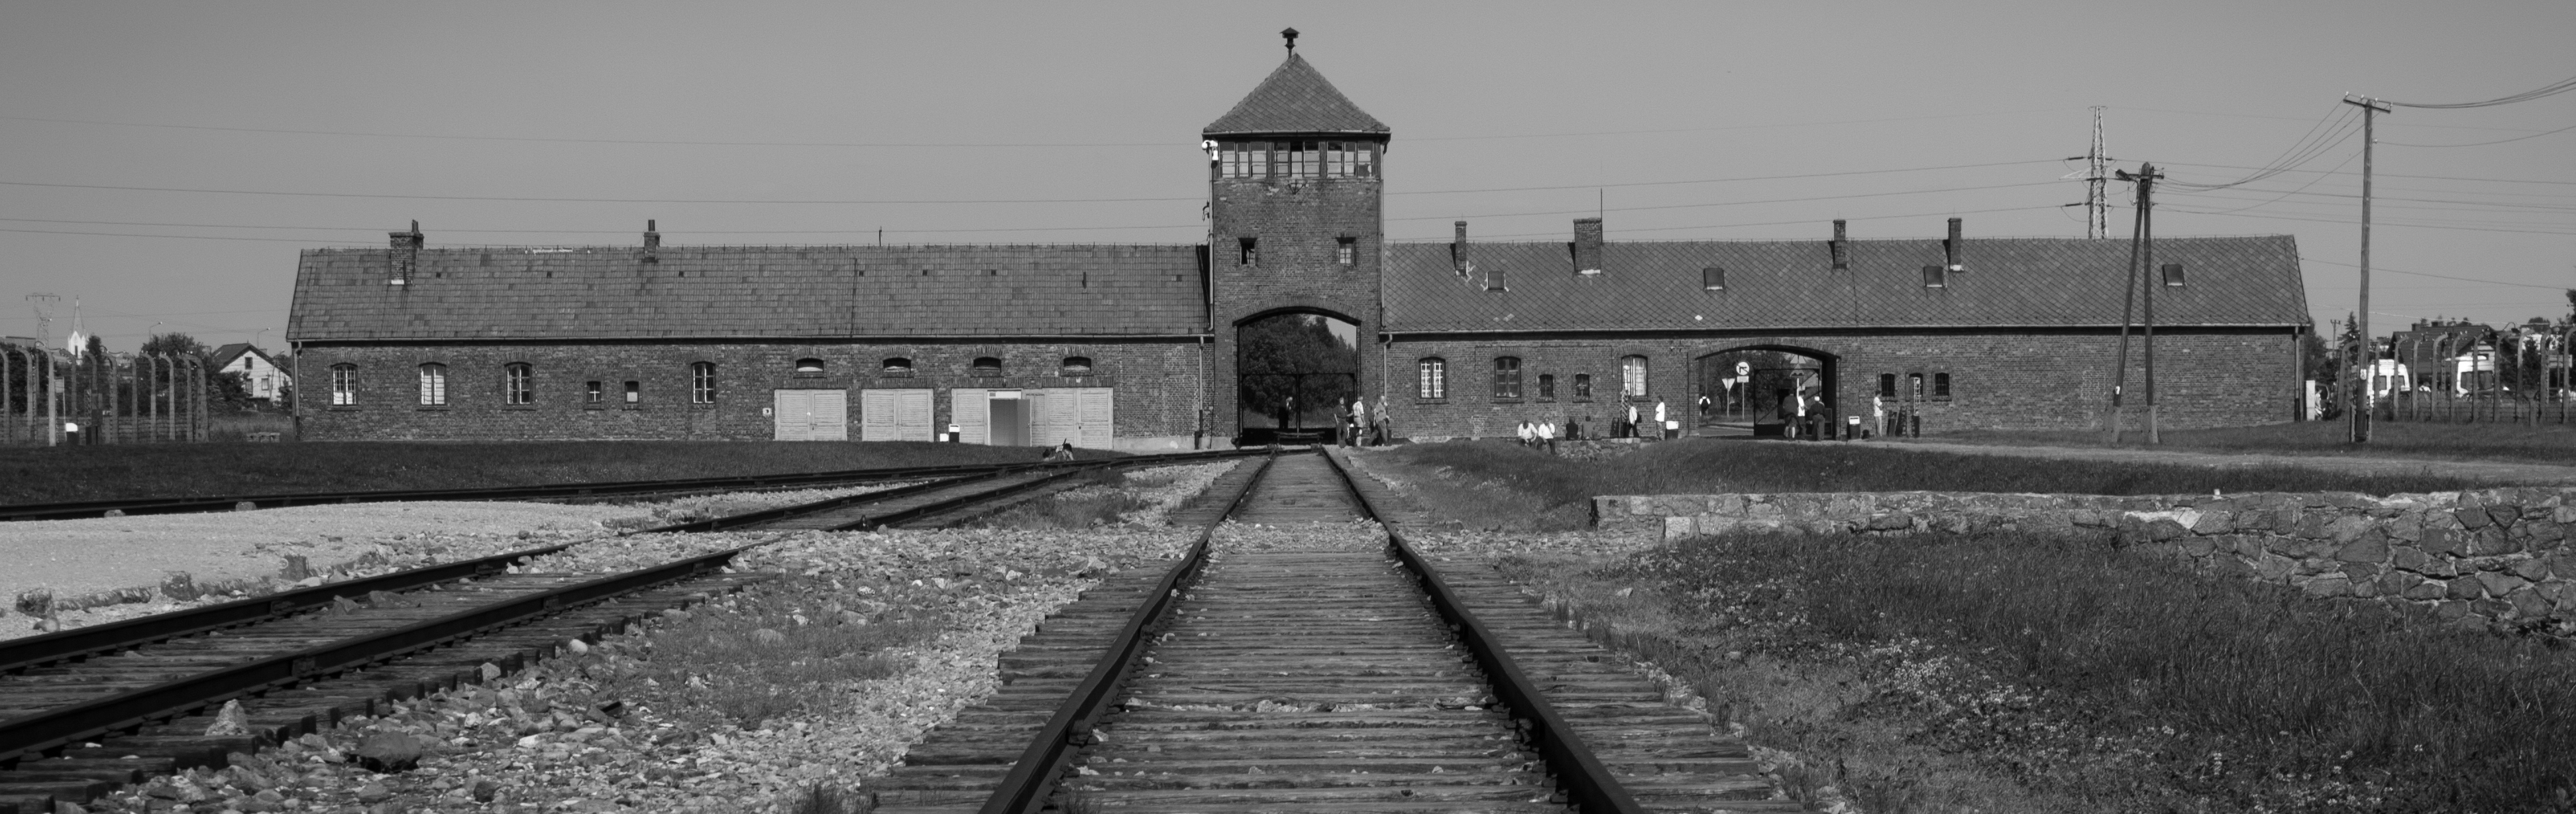 Auschwitz and Birkenau, Poland